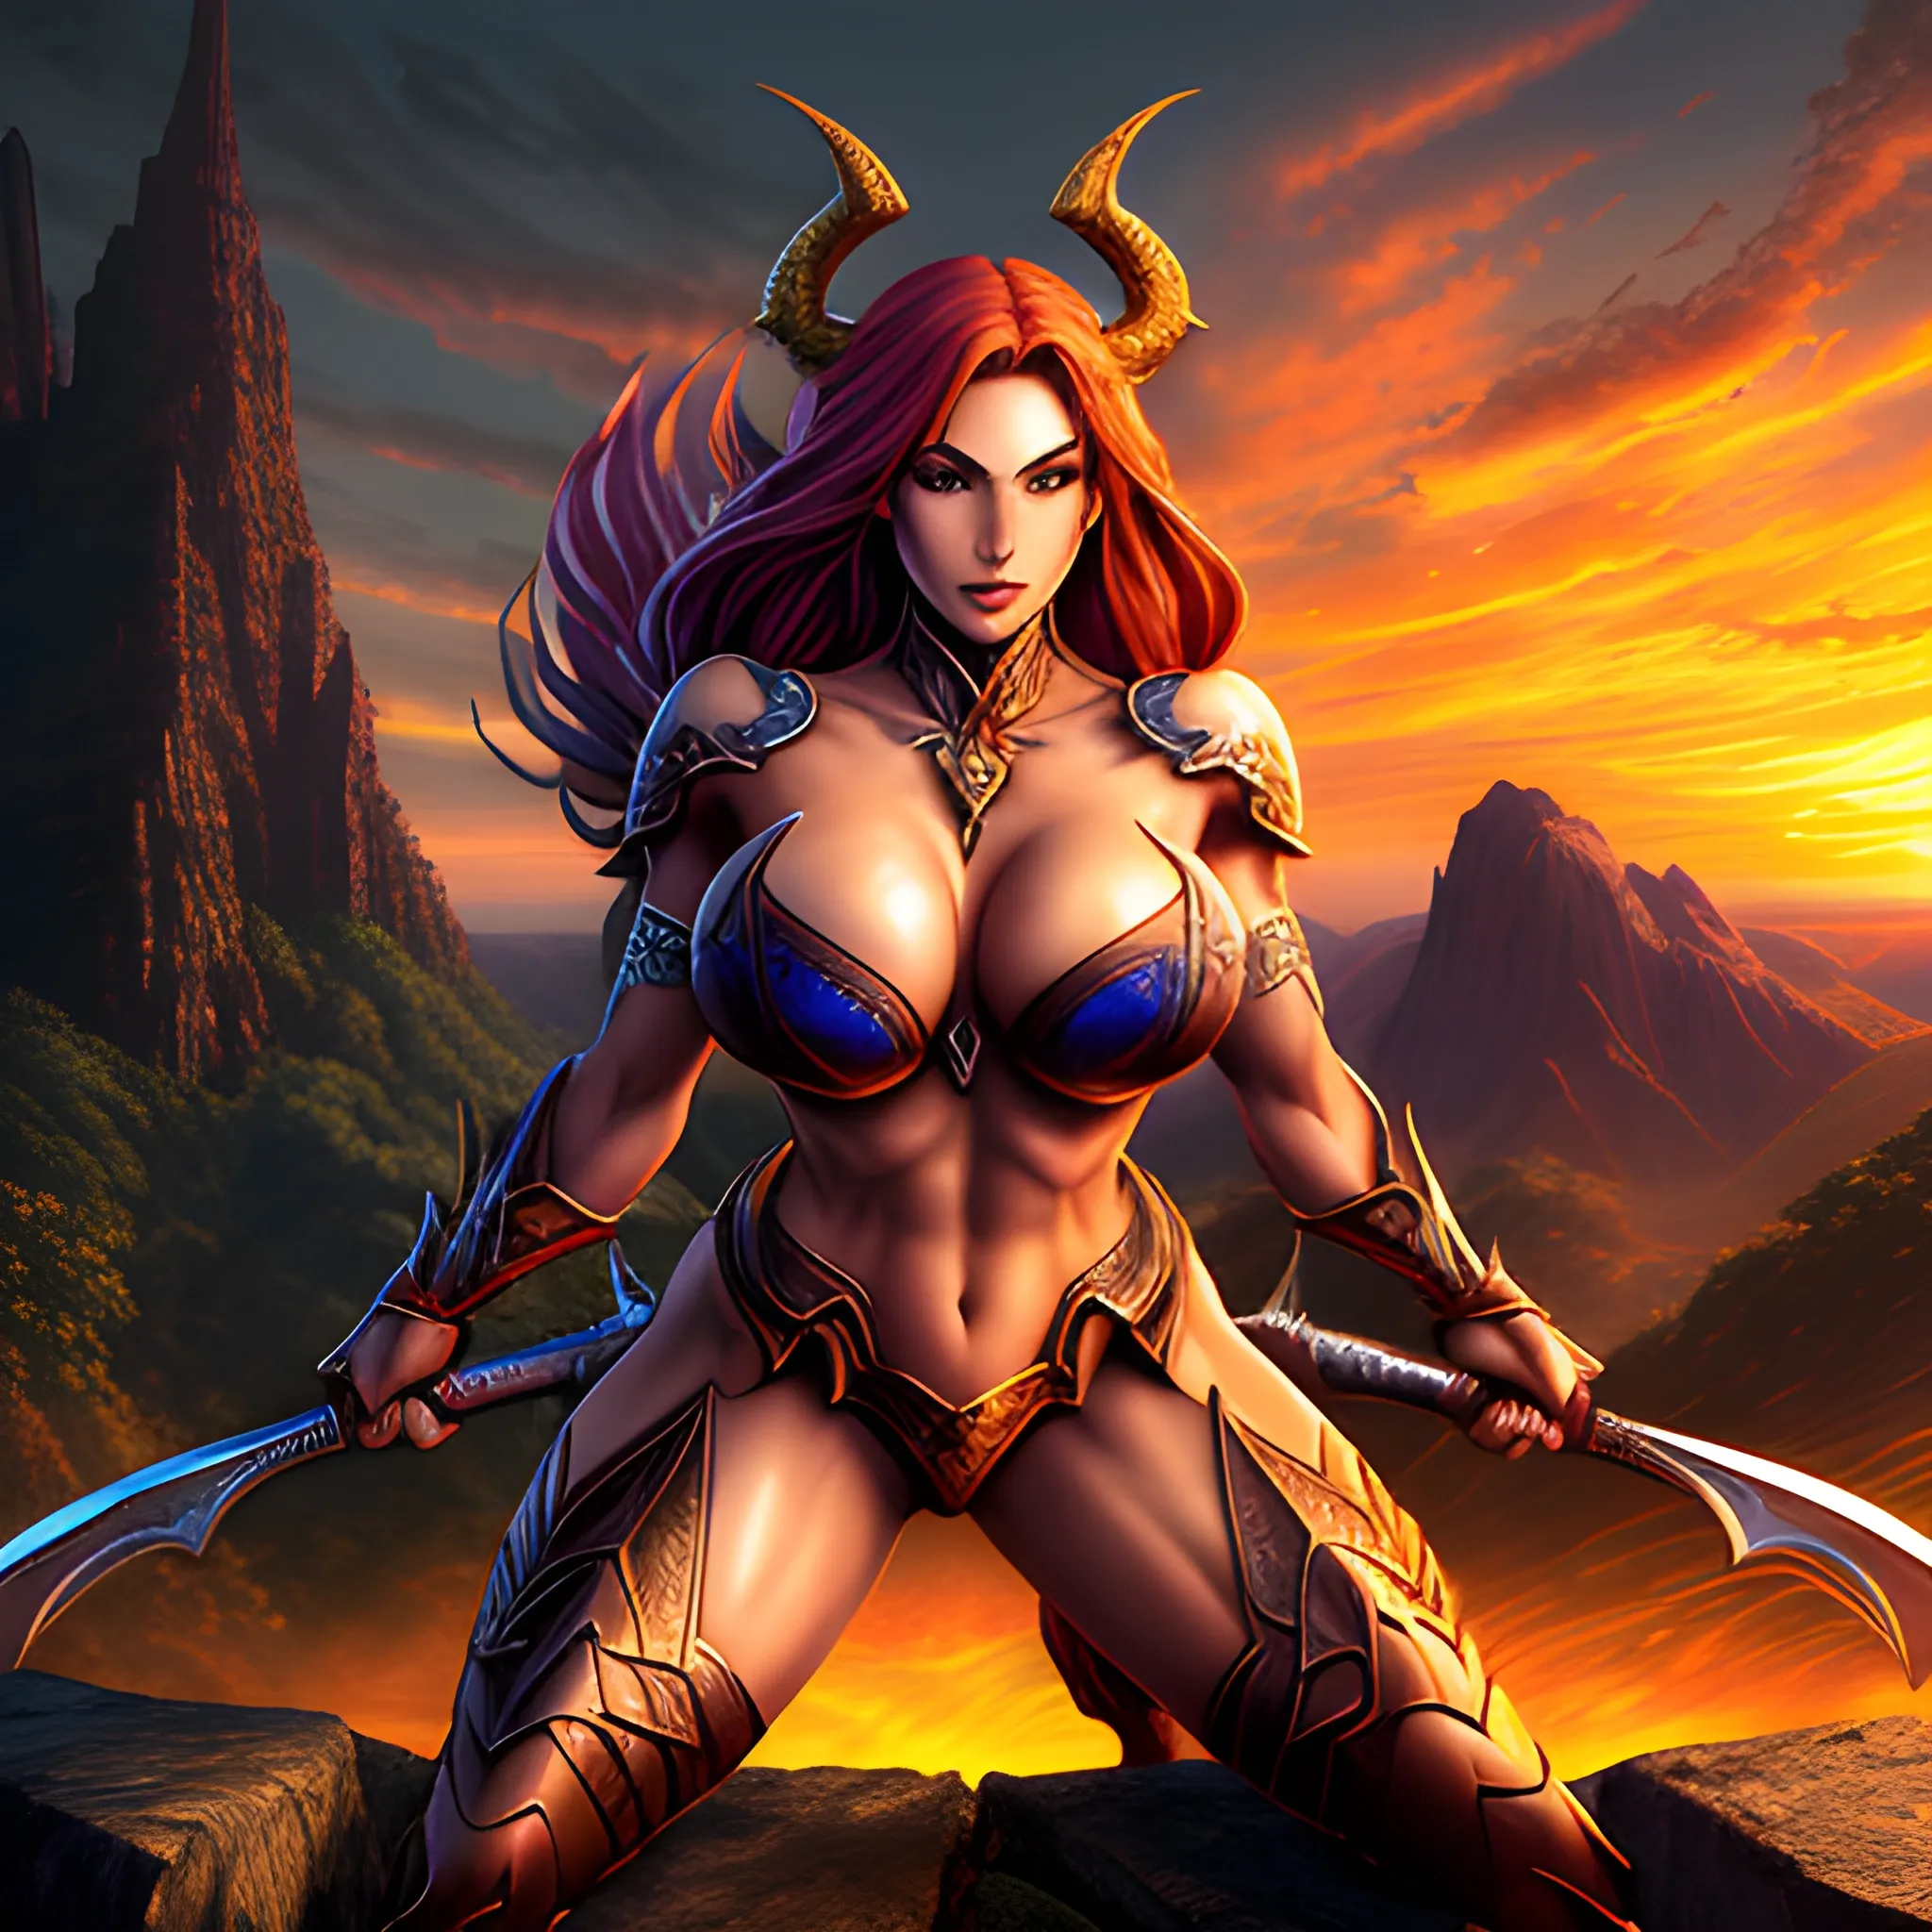 hyper dynamic hyper detailed hyper beautiful Amazonian girl warrior hyper detailed Dragon's Crown™ videogame character Amazon™ art, hyper detailed sunset battlefield scene background, HD, 8k, photography